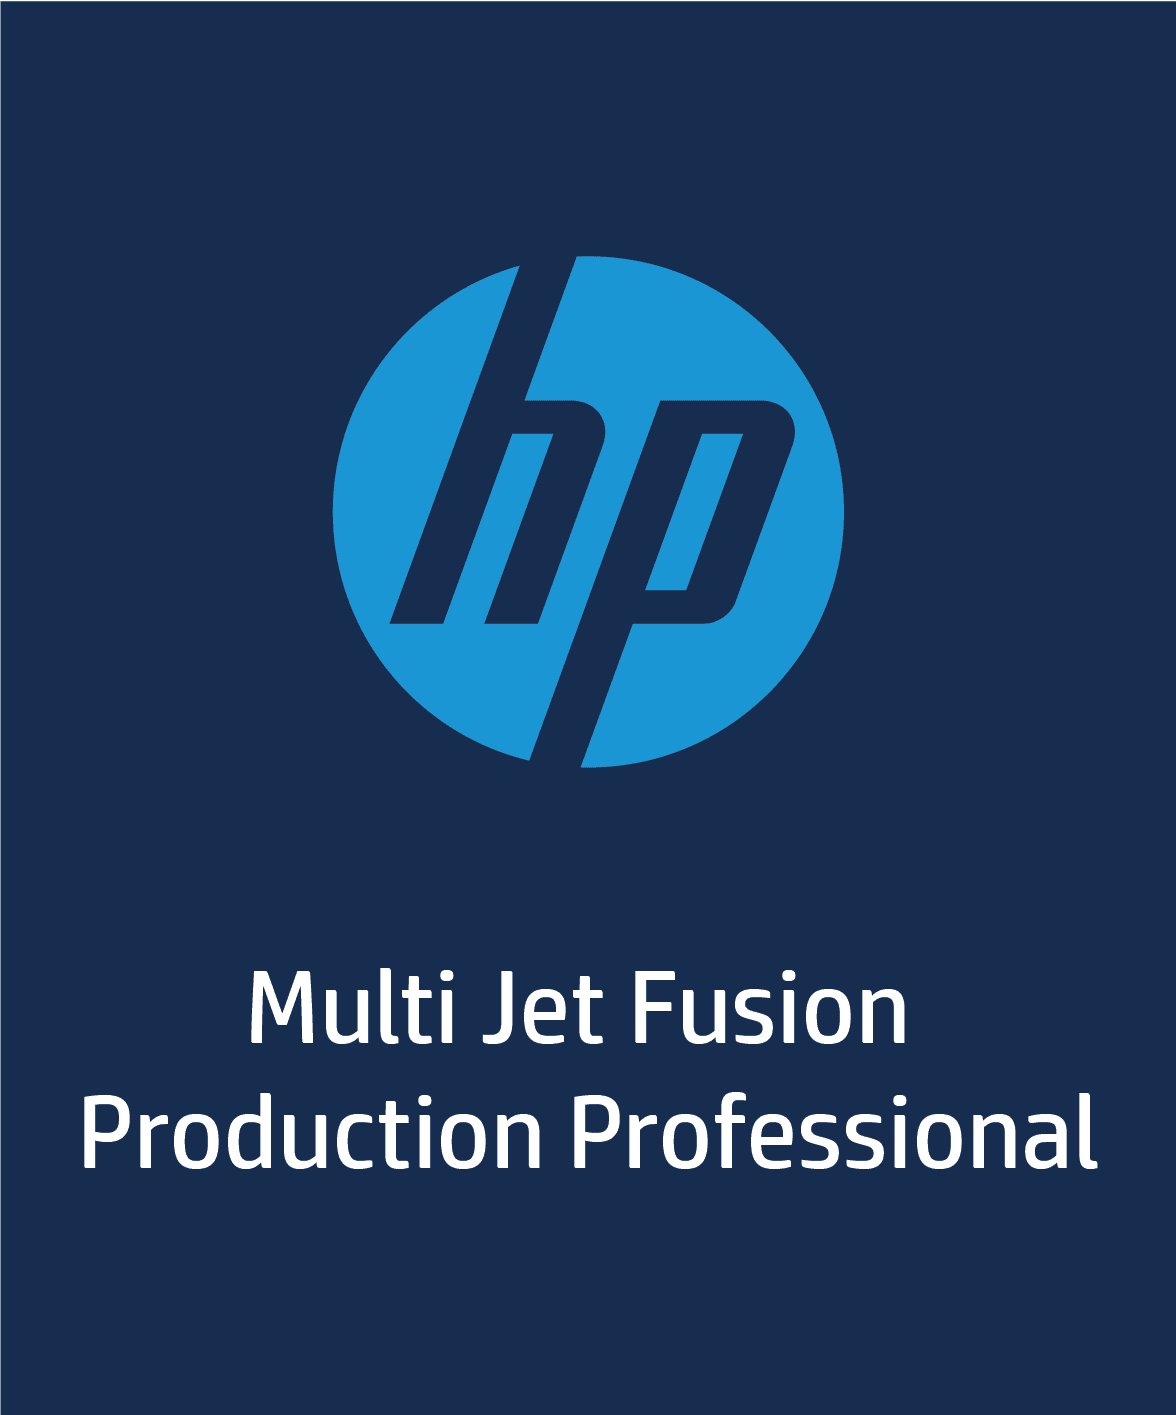 HP MJF Production Partner Logo